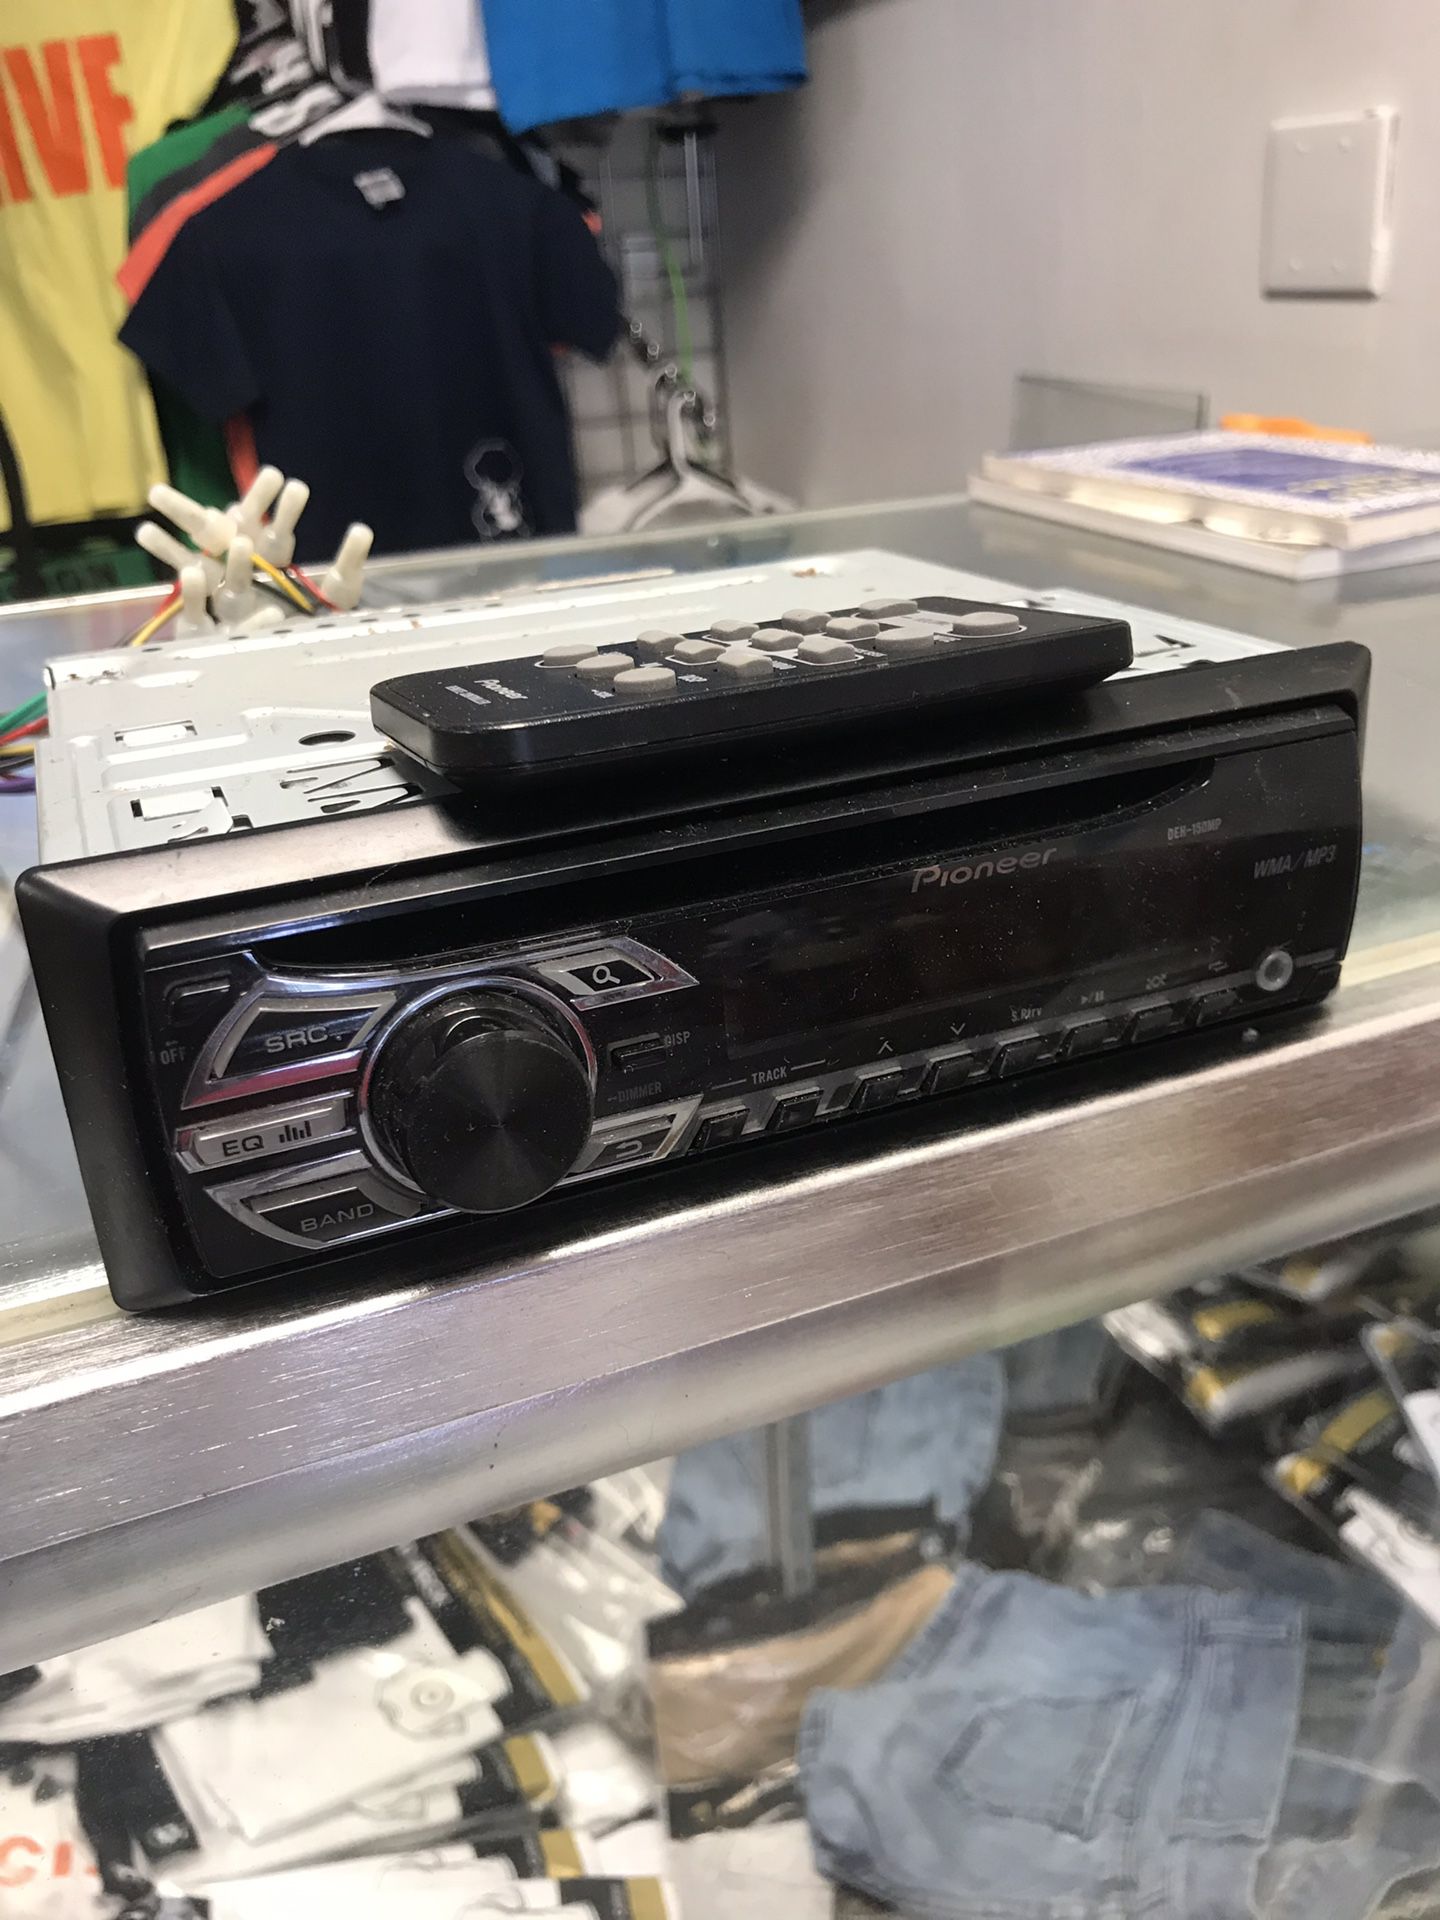 Pioneer den-150mp car audio radio CD player with remote